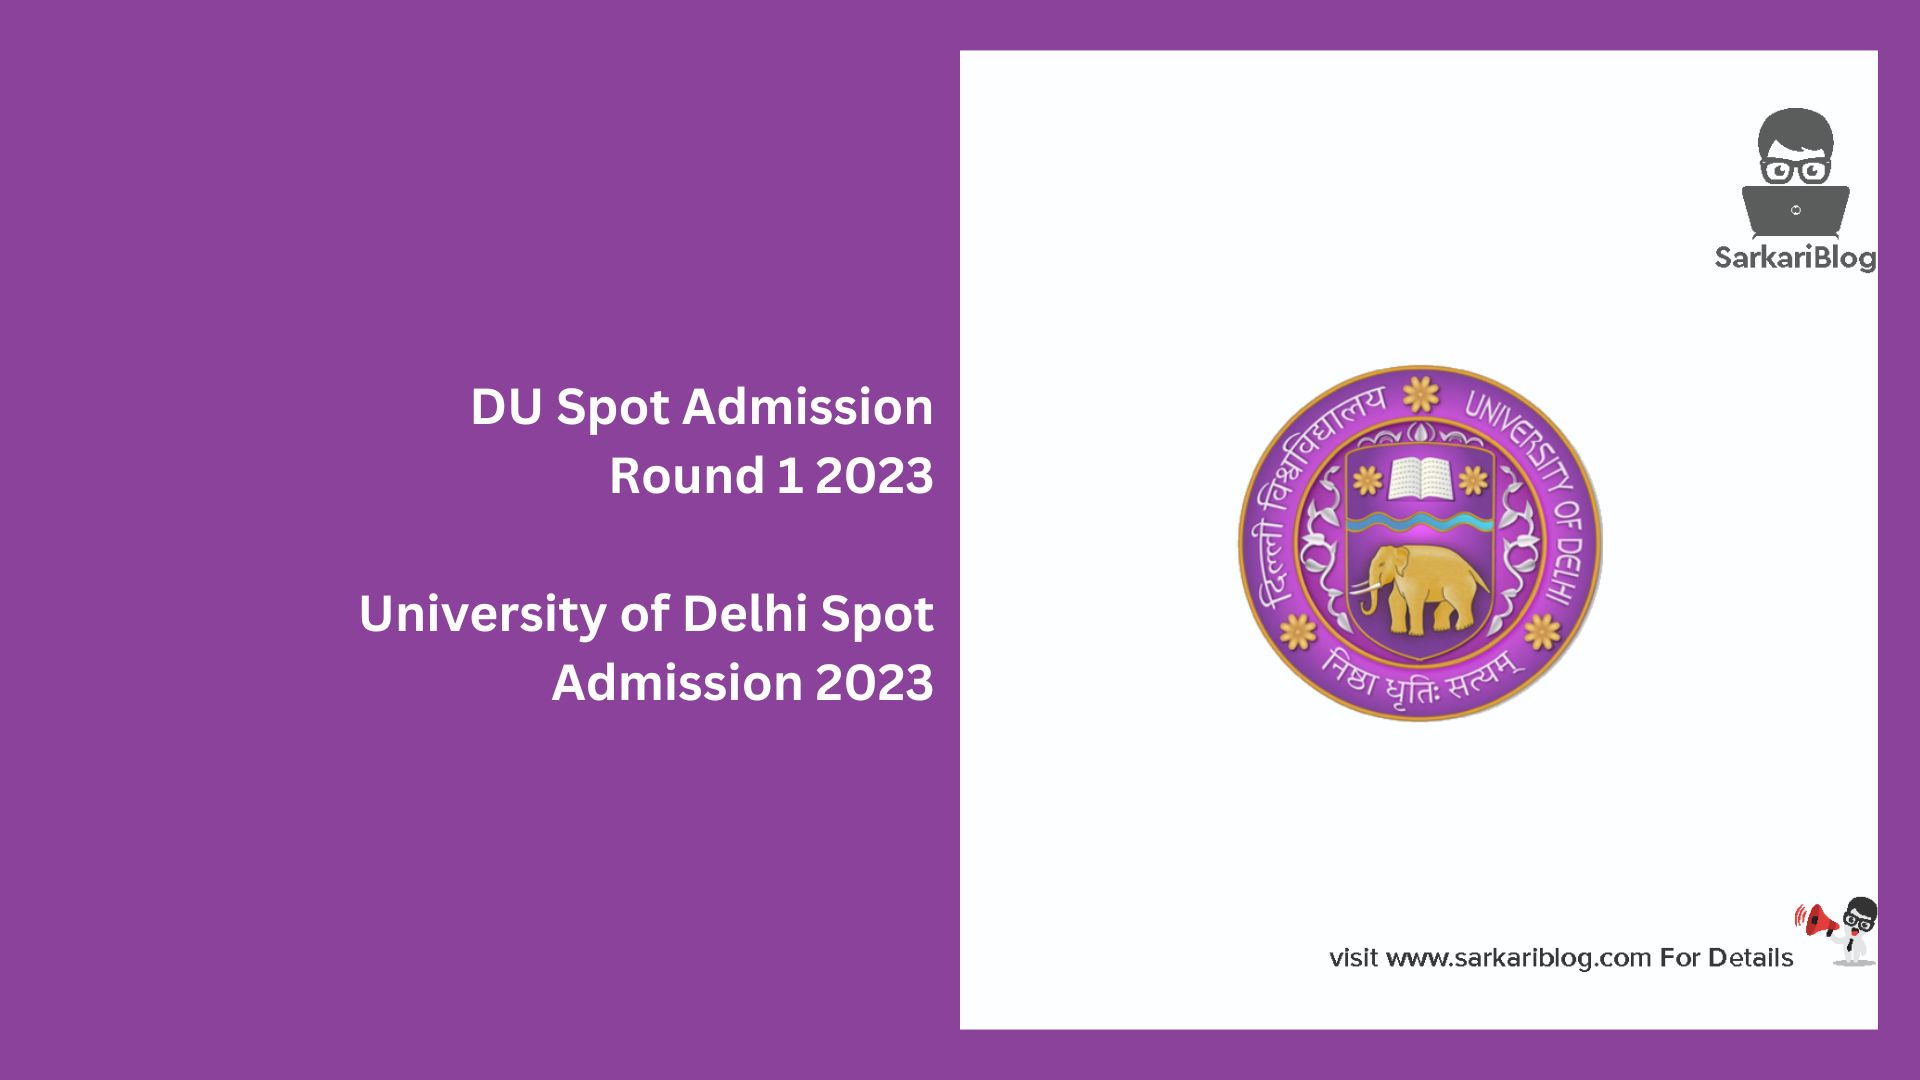 DU Spot Admission Round 1 2023